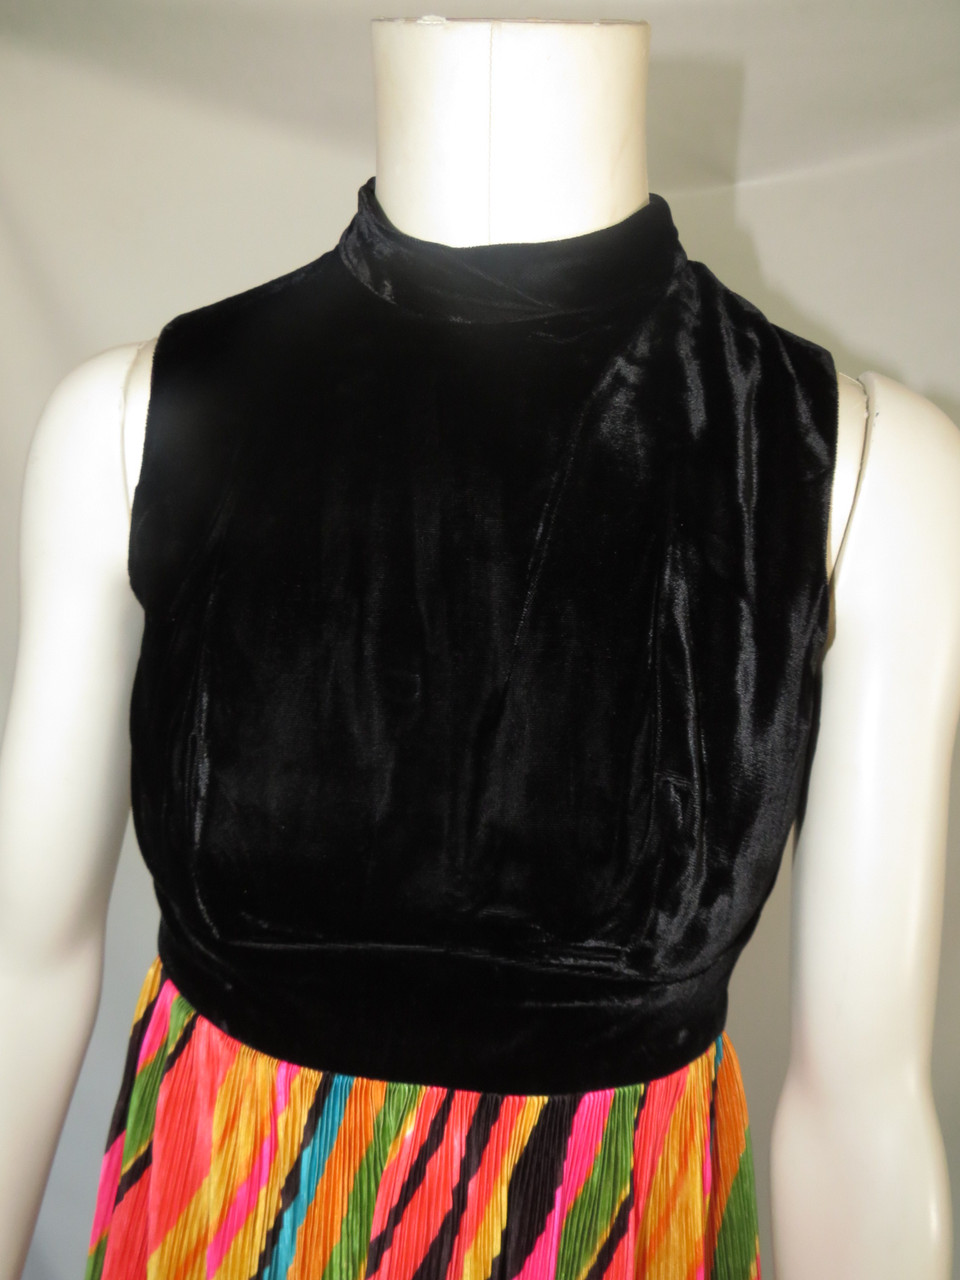 1960s Groovy Patterned Dress with Velvet Black Turtleneck